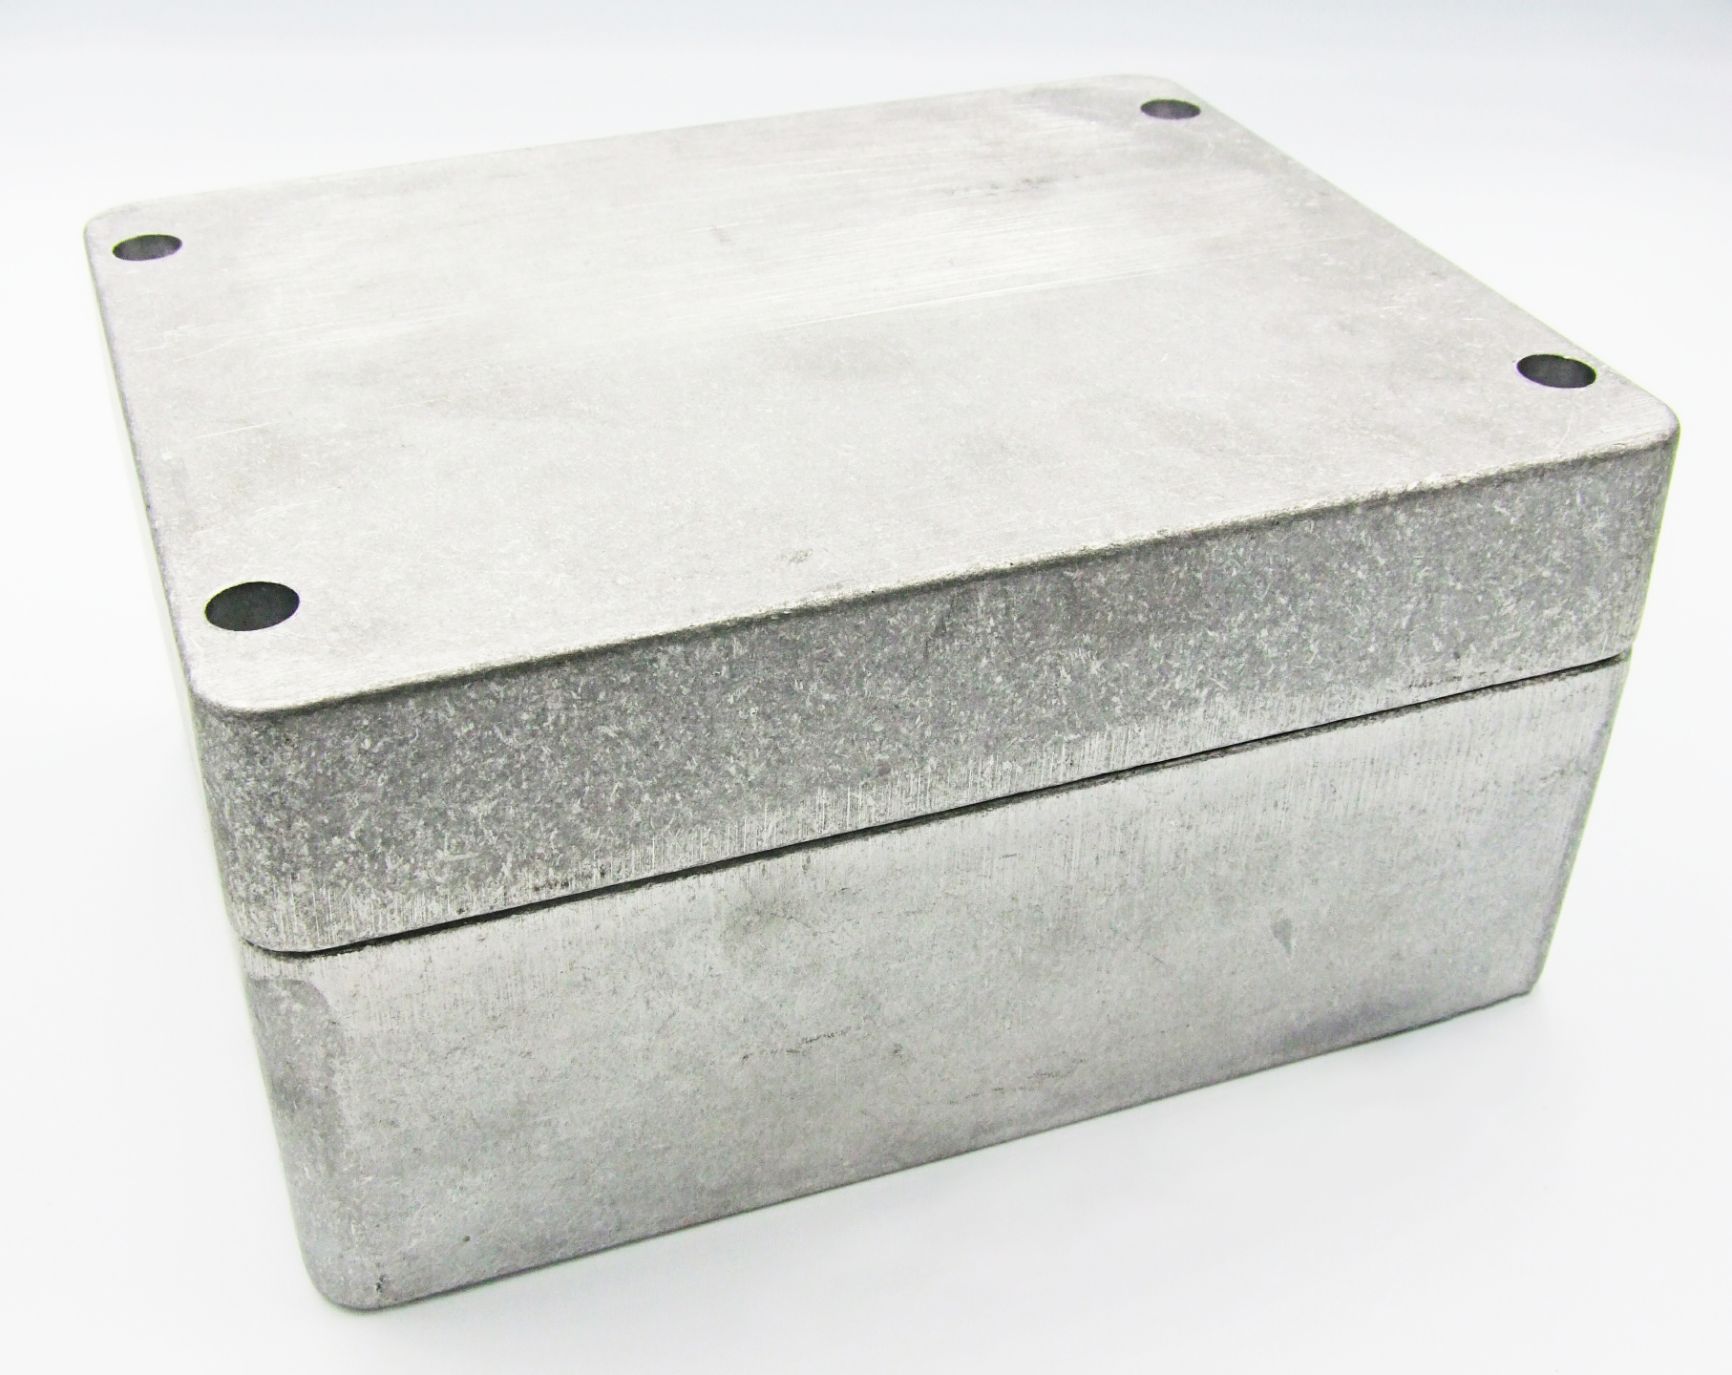 TH - Junction Box - Aluminiuim Cast